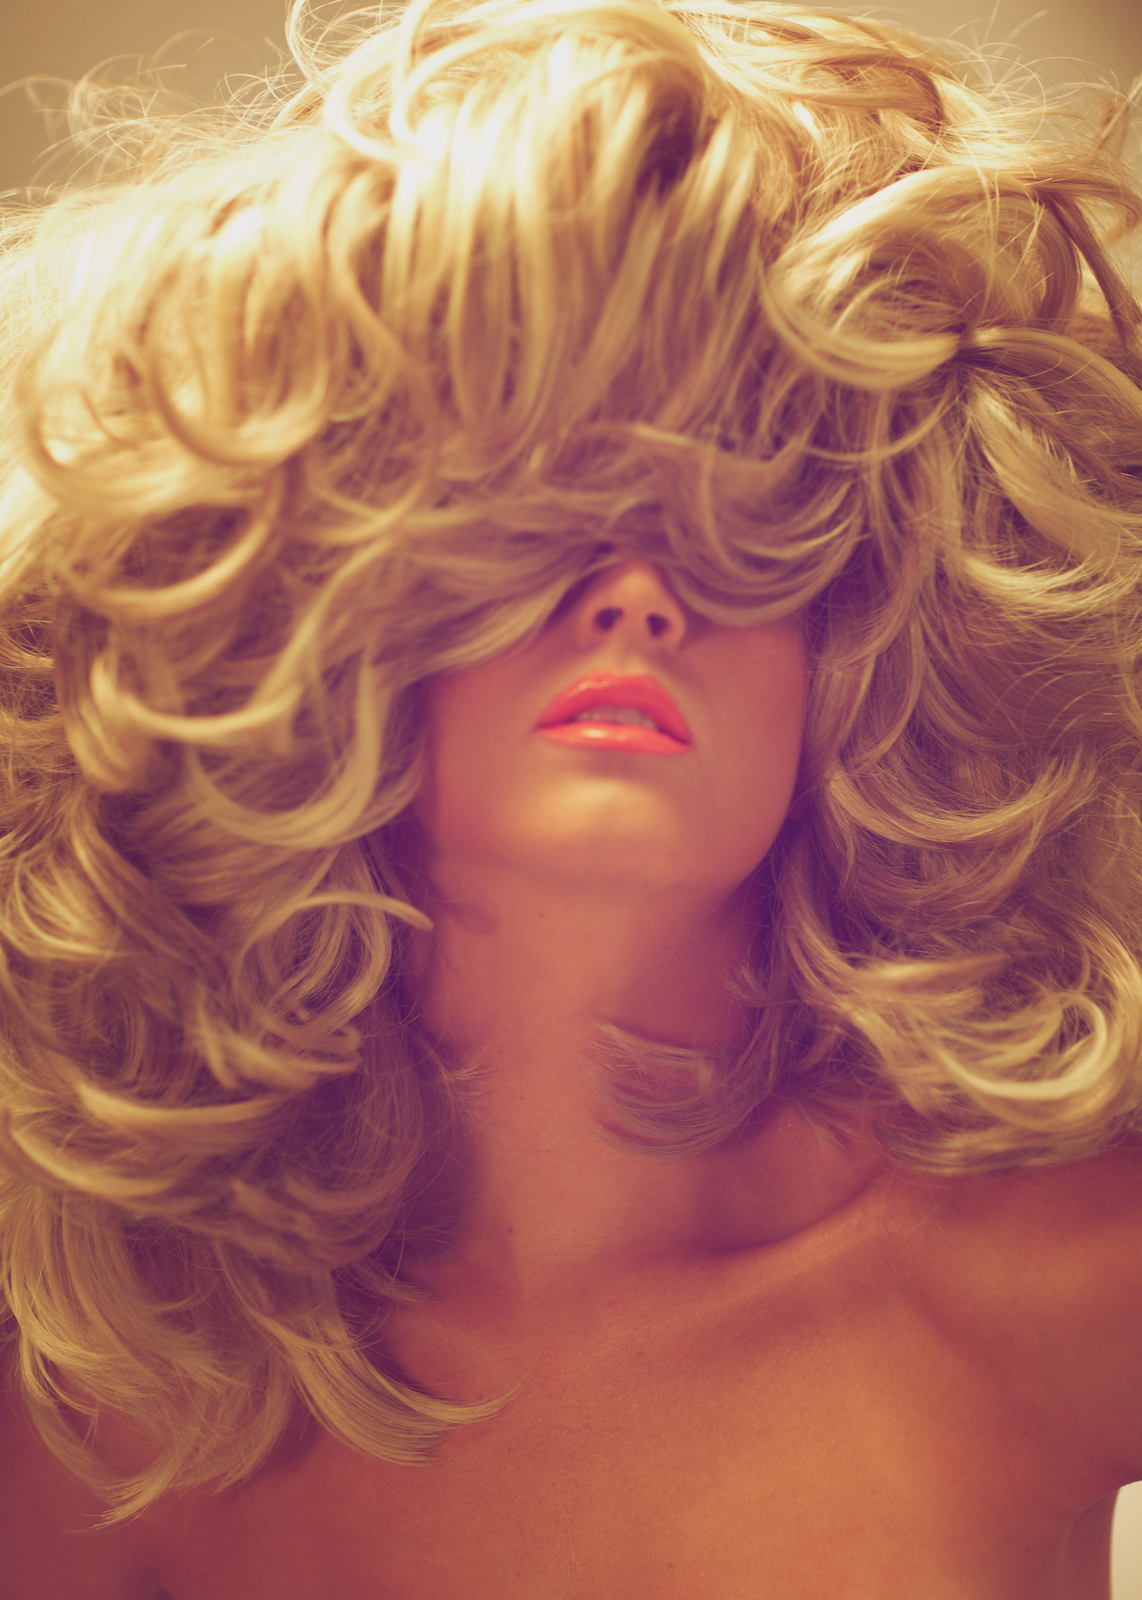 caesar lima Big Hair cheveux pixelpasta michelle arenal michele arenal cosmetics beauty photography conceptual